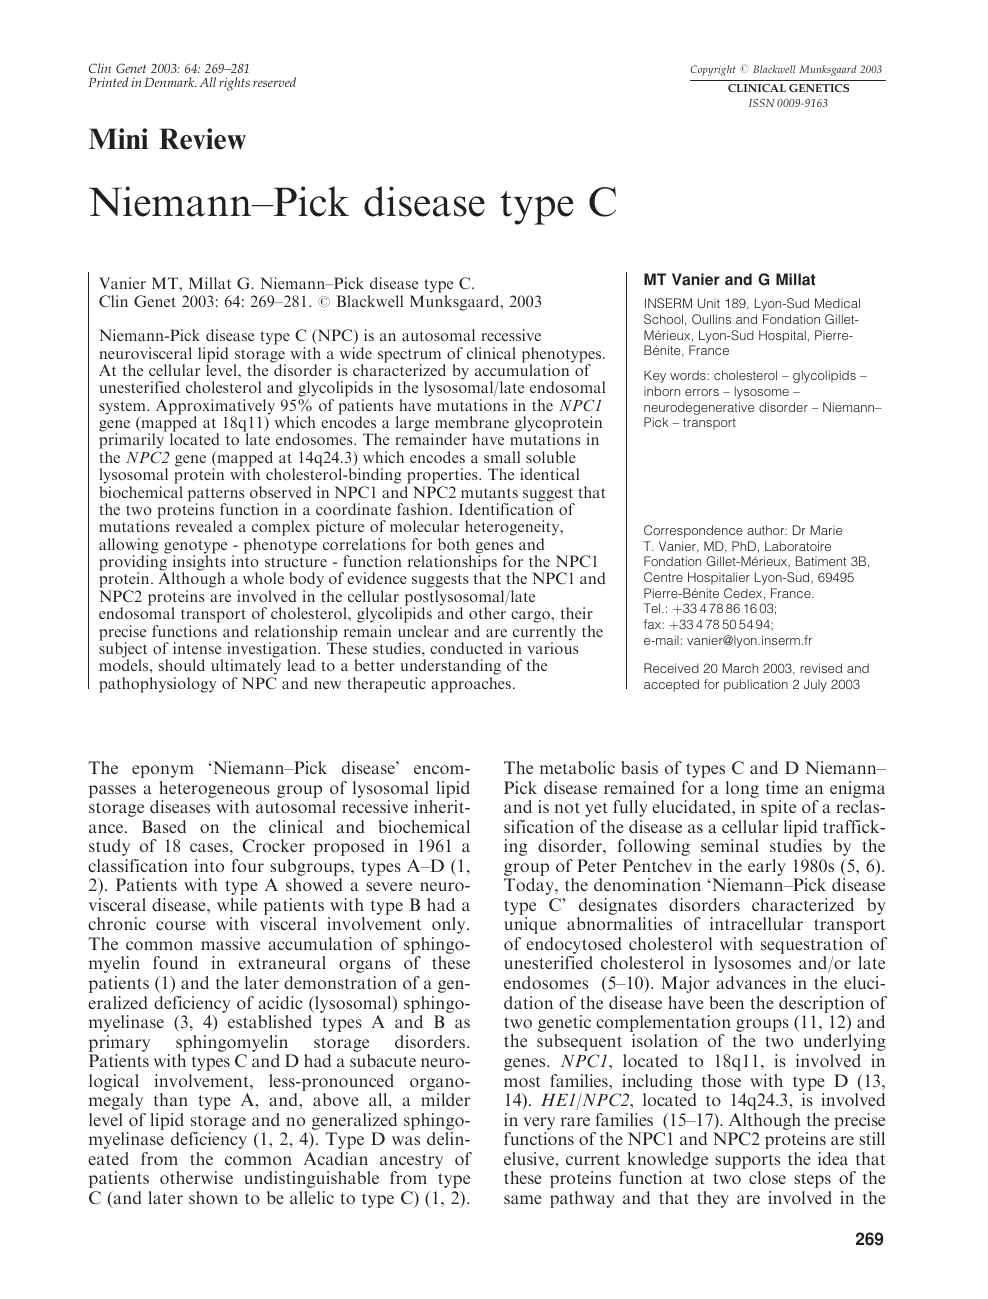 Lipid trafficking defects in Niemann-Pick type C disease